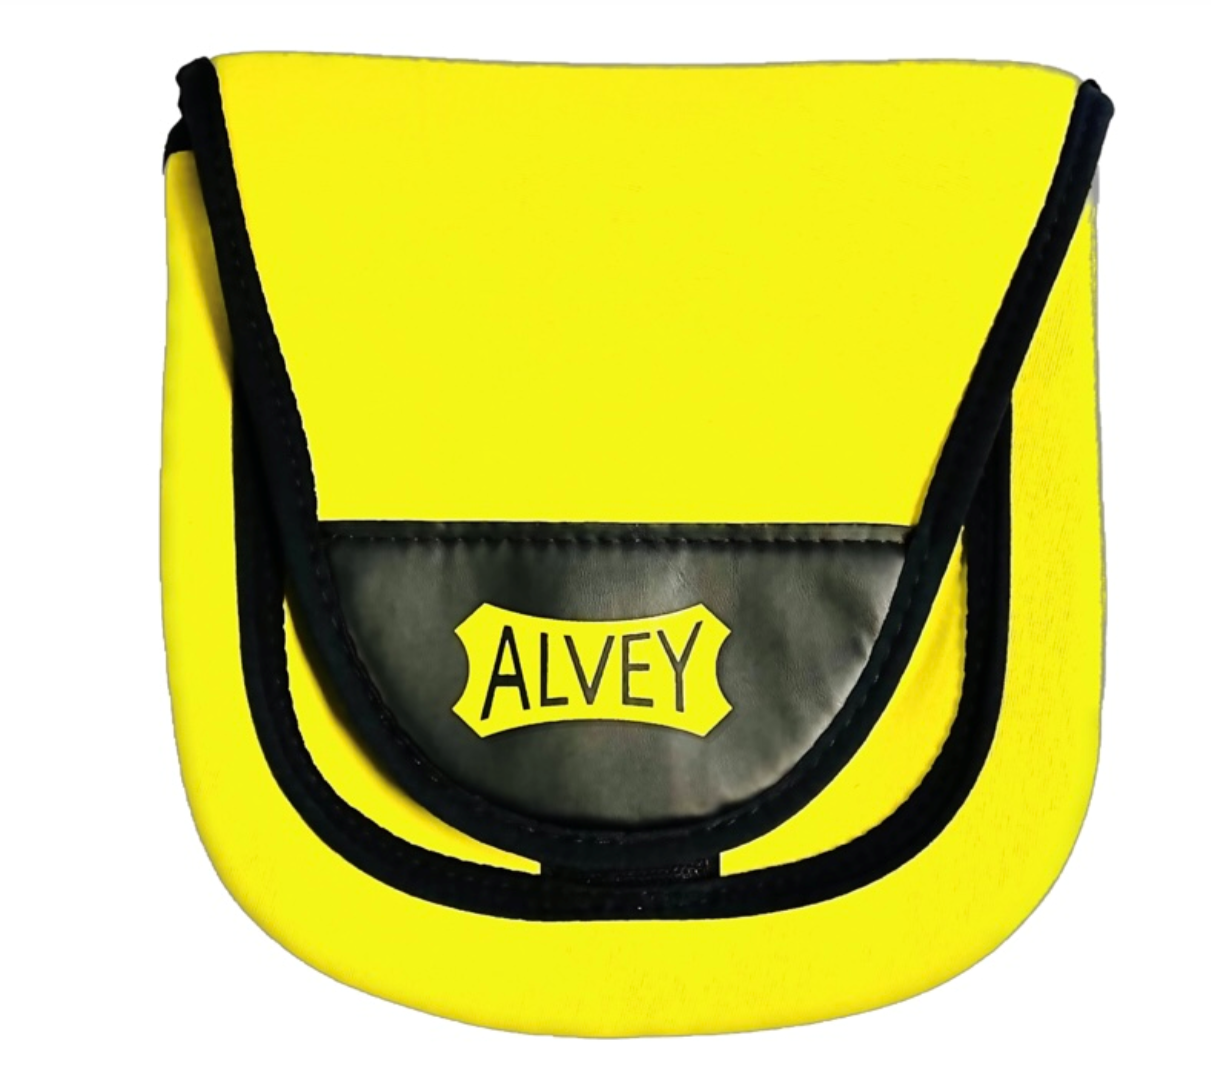 Alvey Neoprene Reel Bag - The Bait Shop Gold Coast